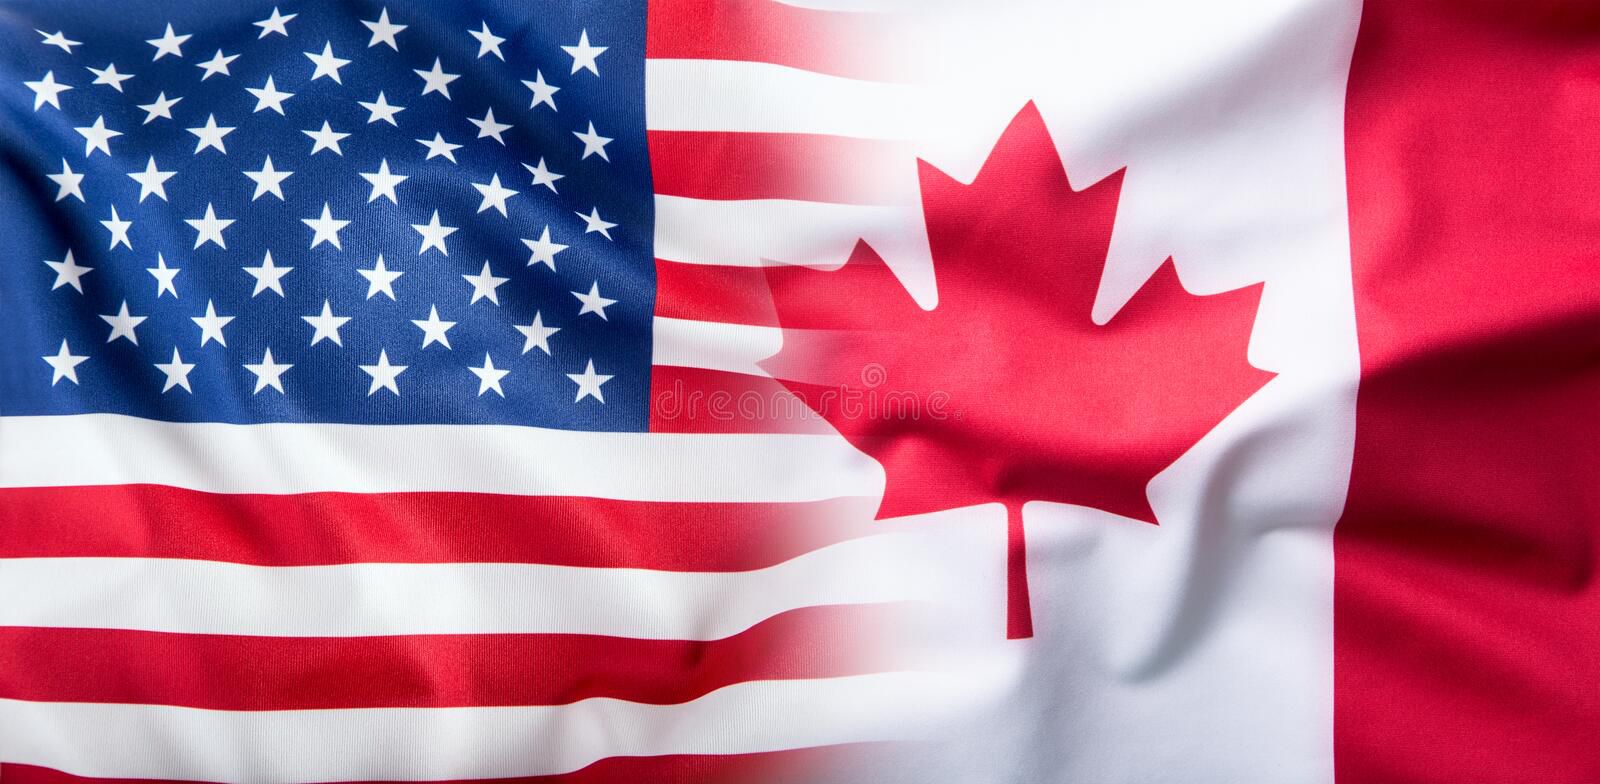 پرچم کانادا و آمریکا